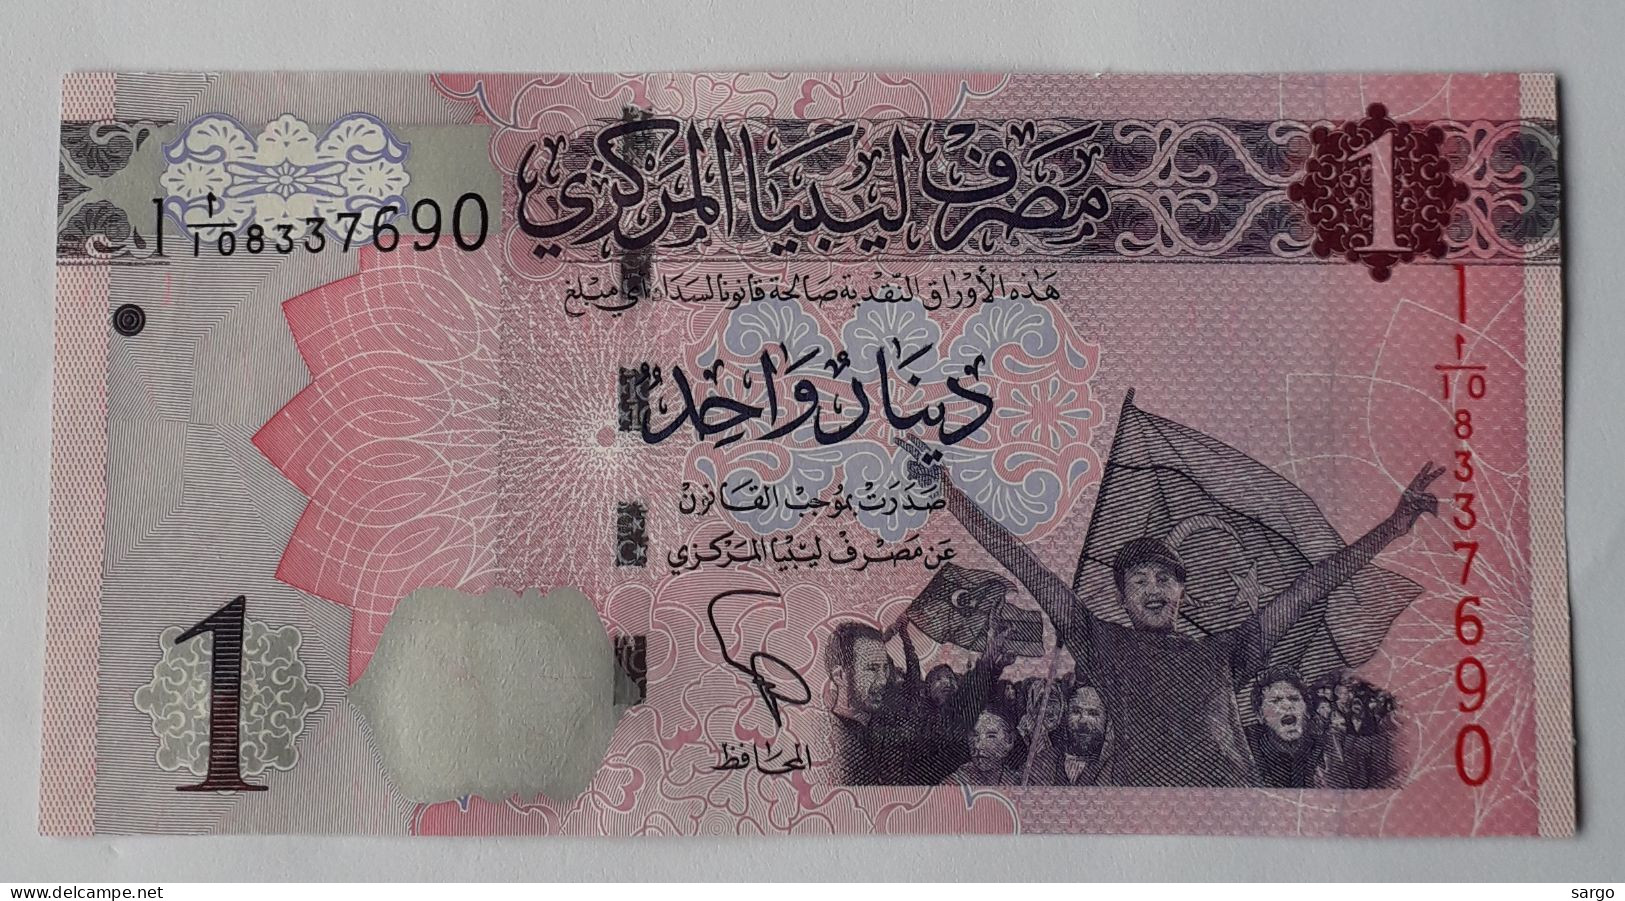 LIBYA - 1 DINAR - 2013 -  P 76  - UNC - BANKNOTES - PAPER MONEY - CARTAMONETA - - Libia